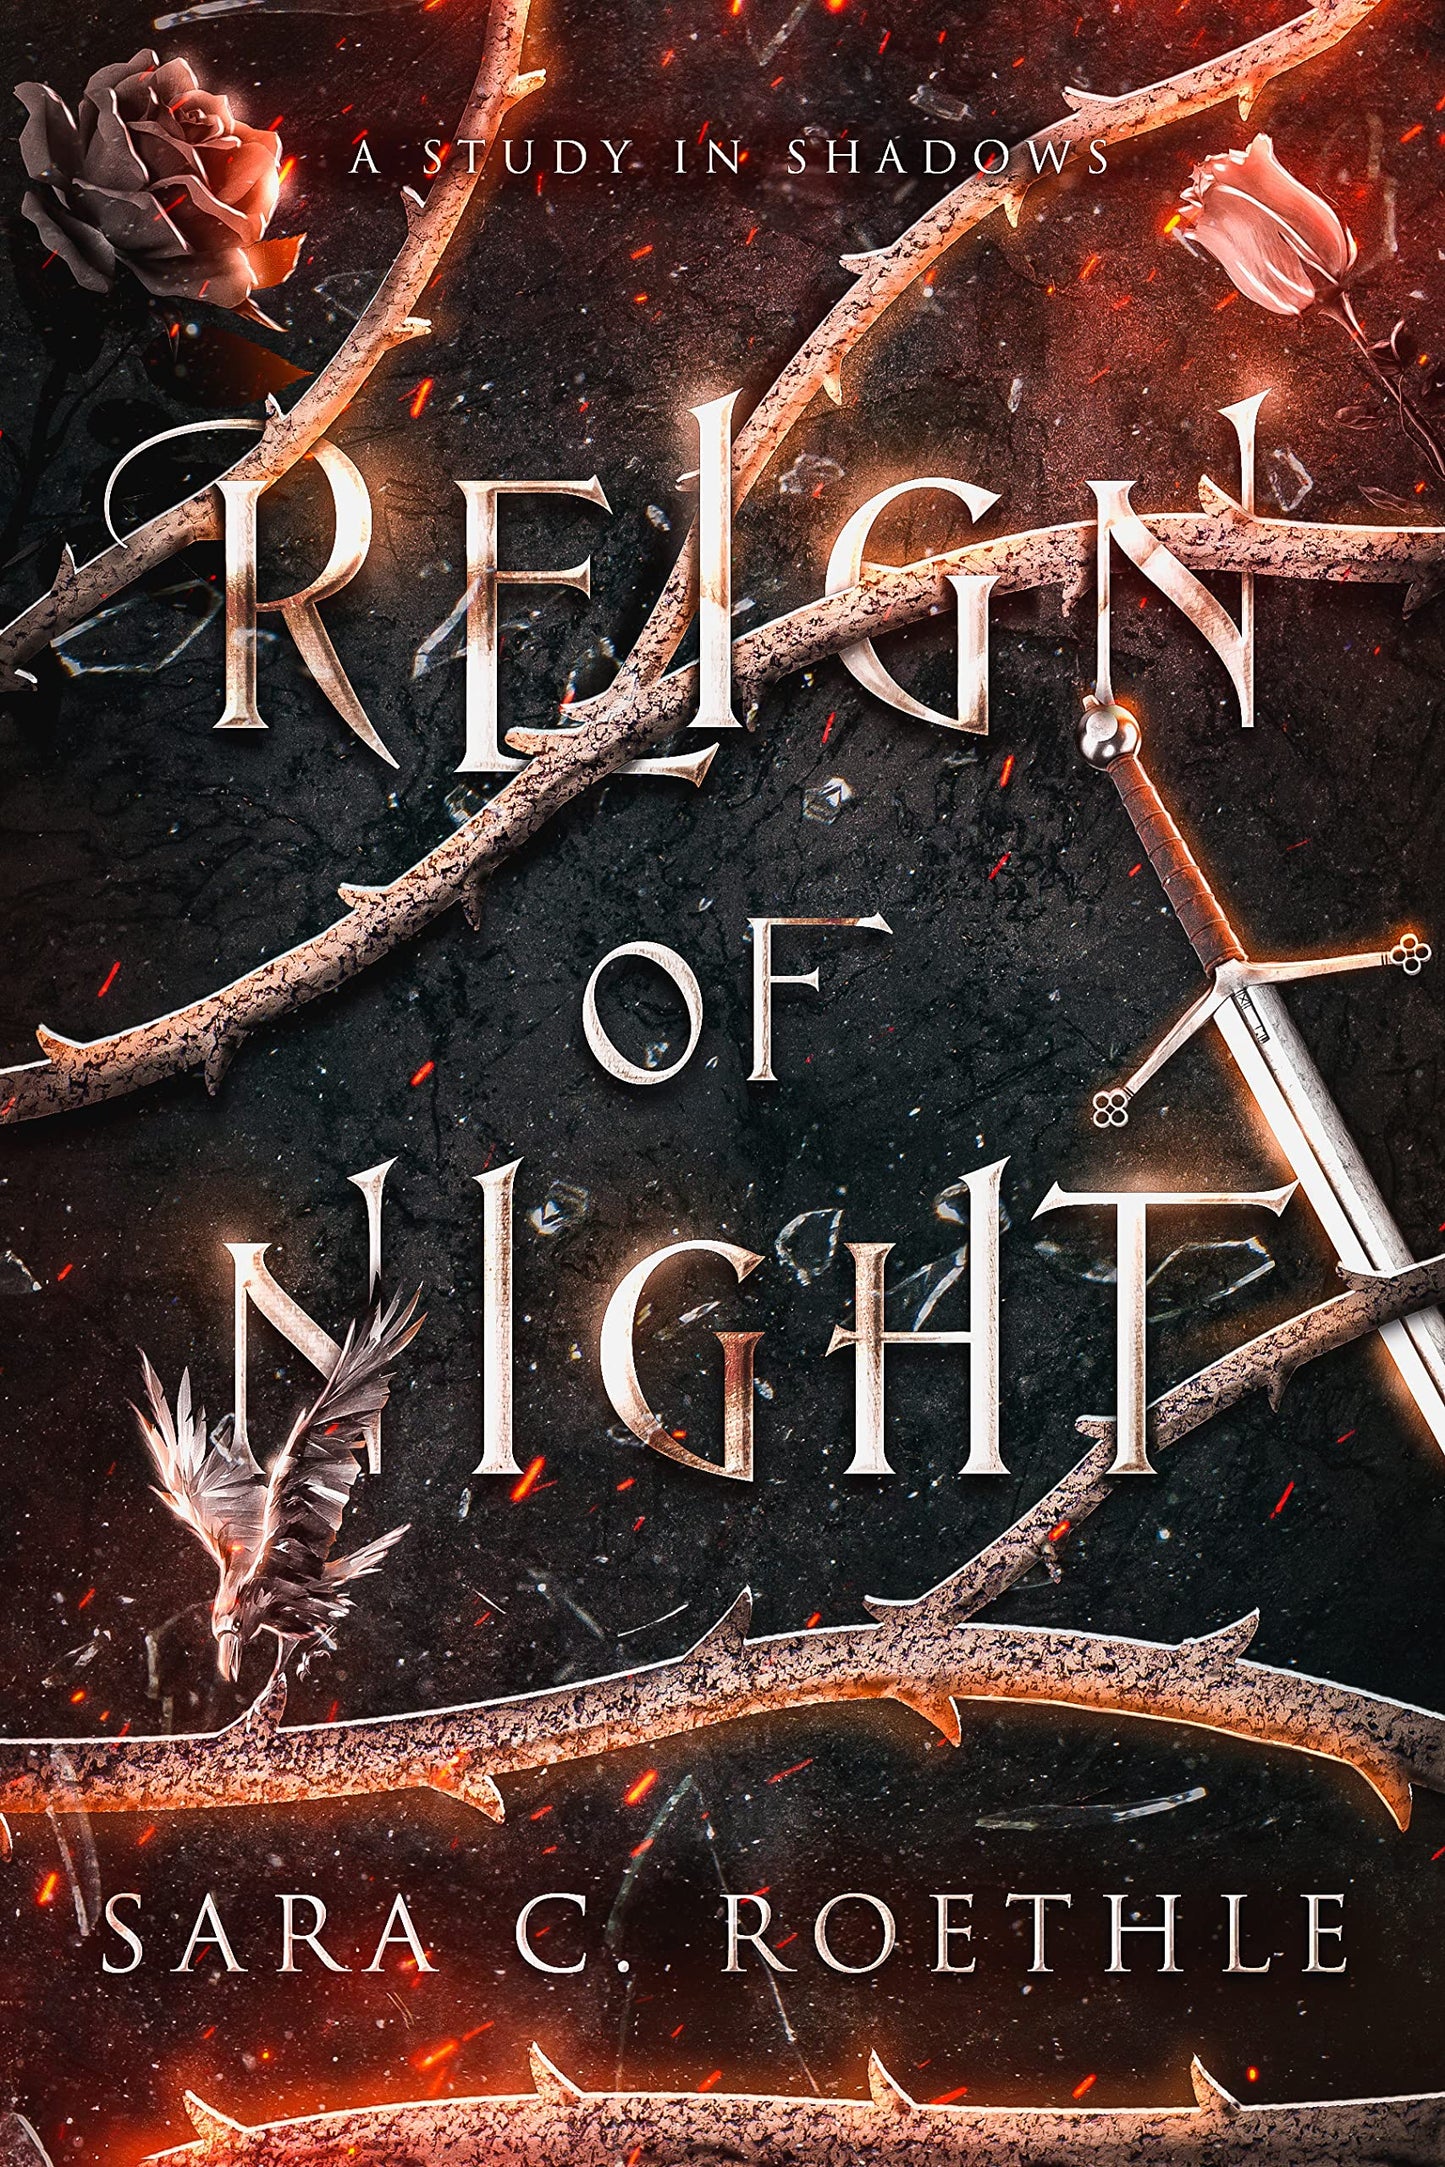 Reign of Night - Sara C. Roethle